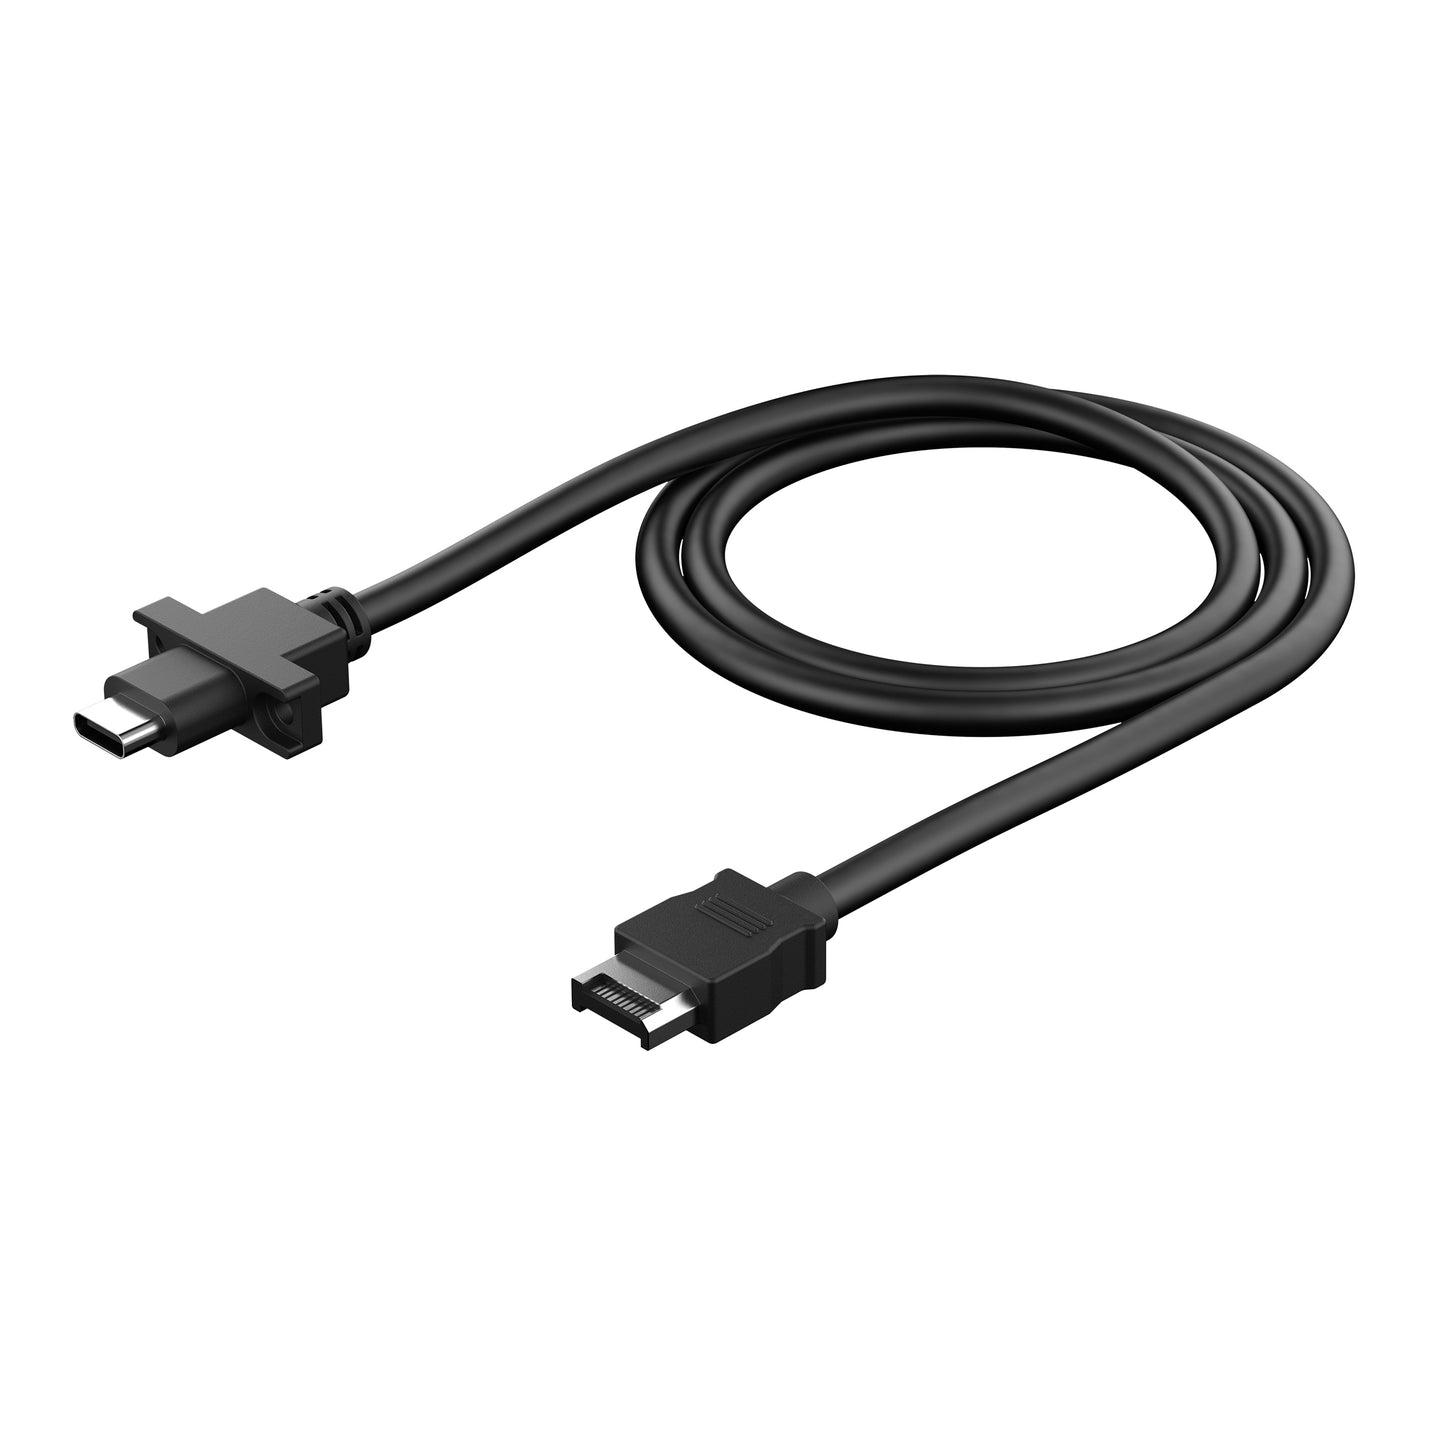 Fractal USB-C 10Gbps Cable – Model D